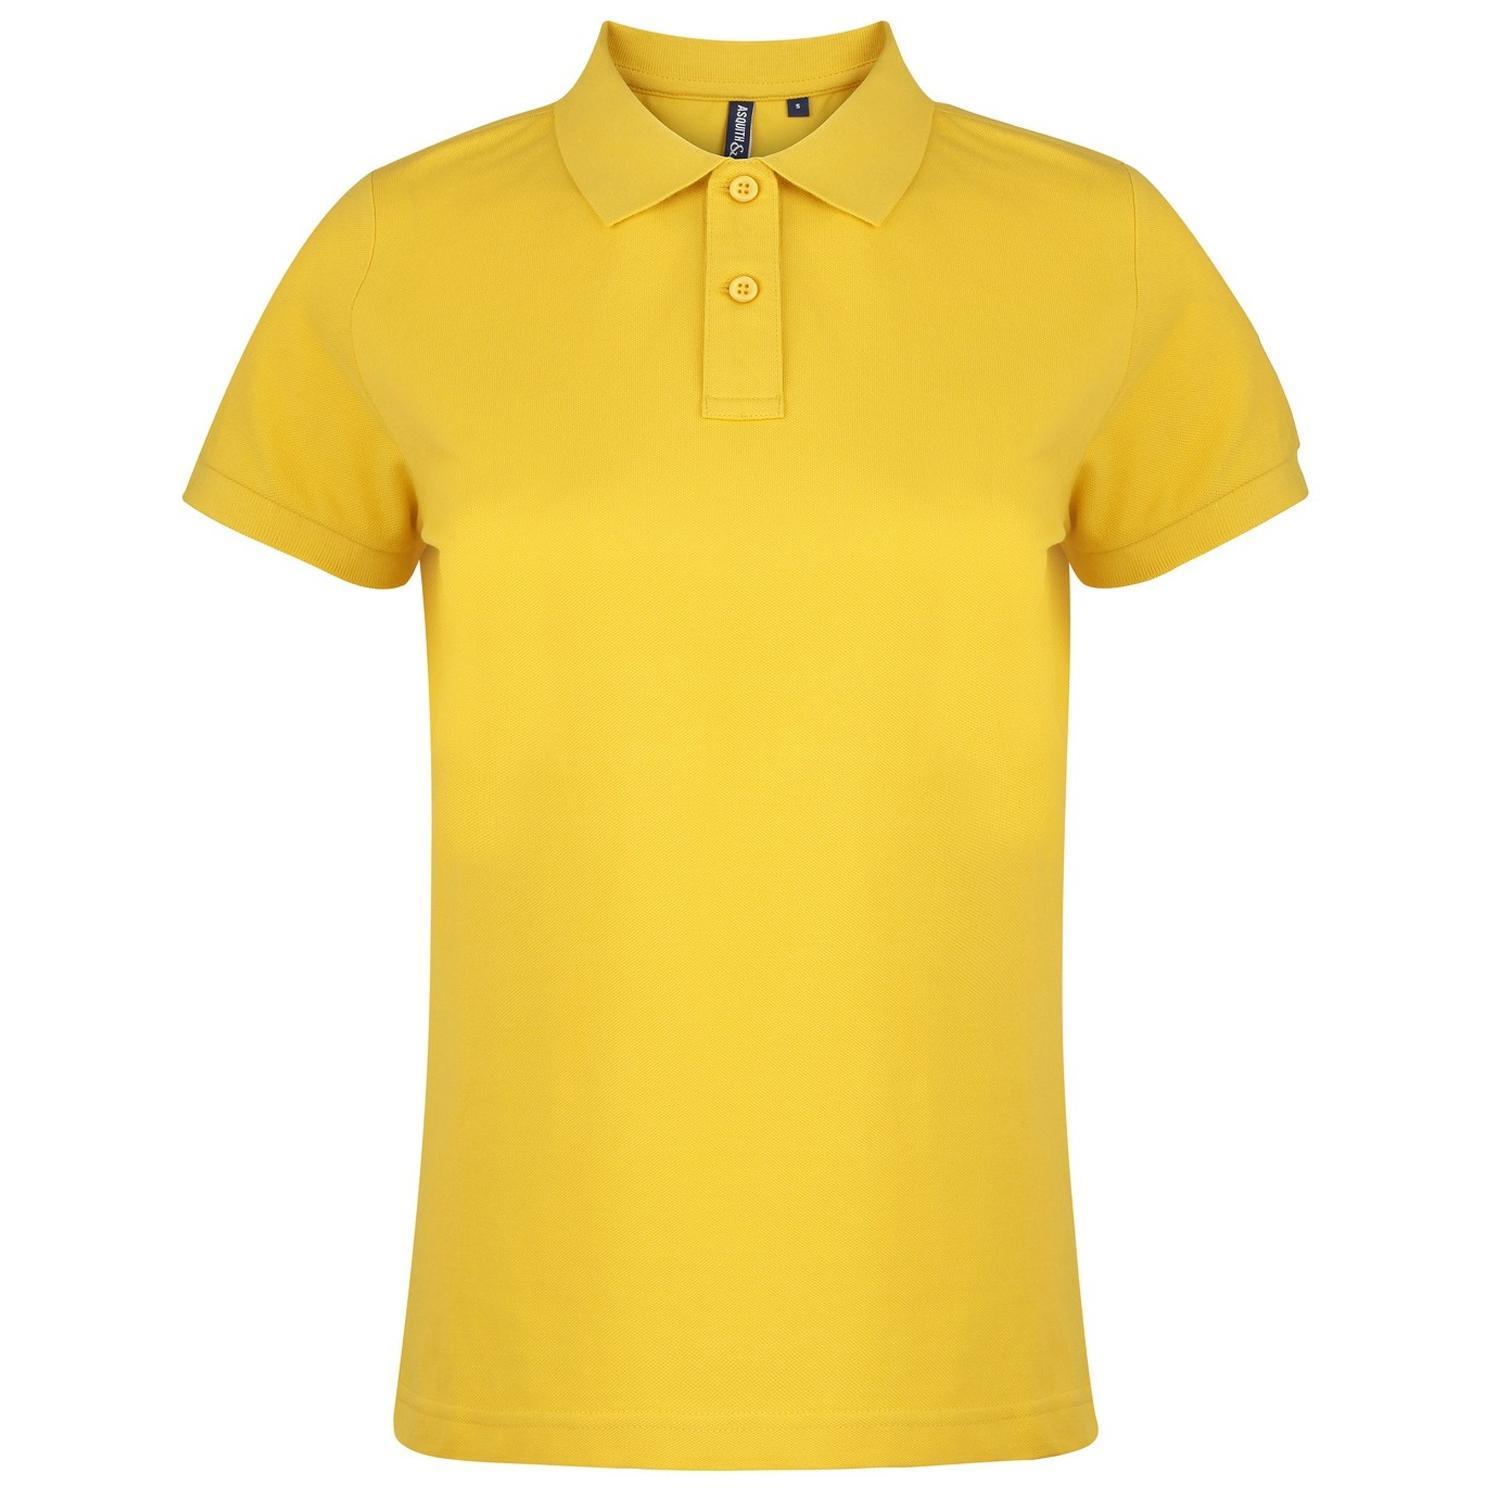 Asquith & Fox Womens/Ladies Plain Short Sleeve Polo Shirt (Sunflower) (L)